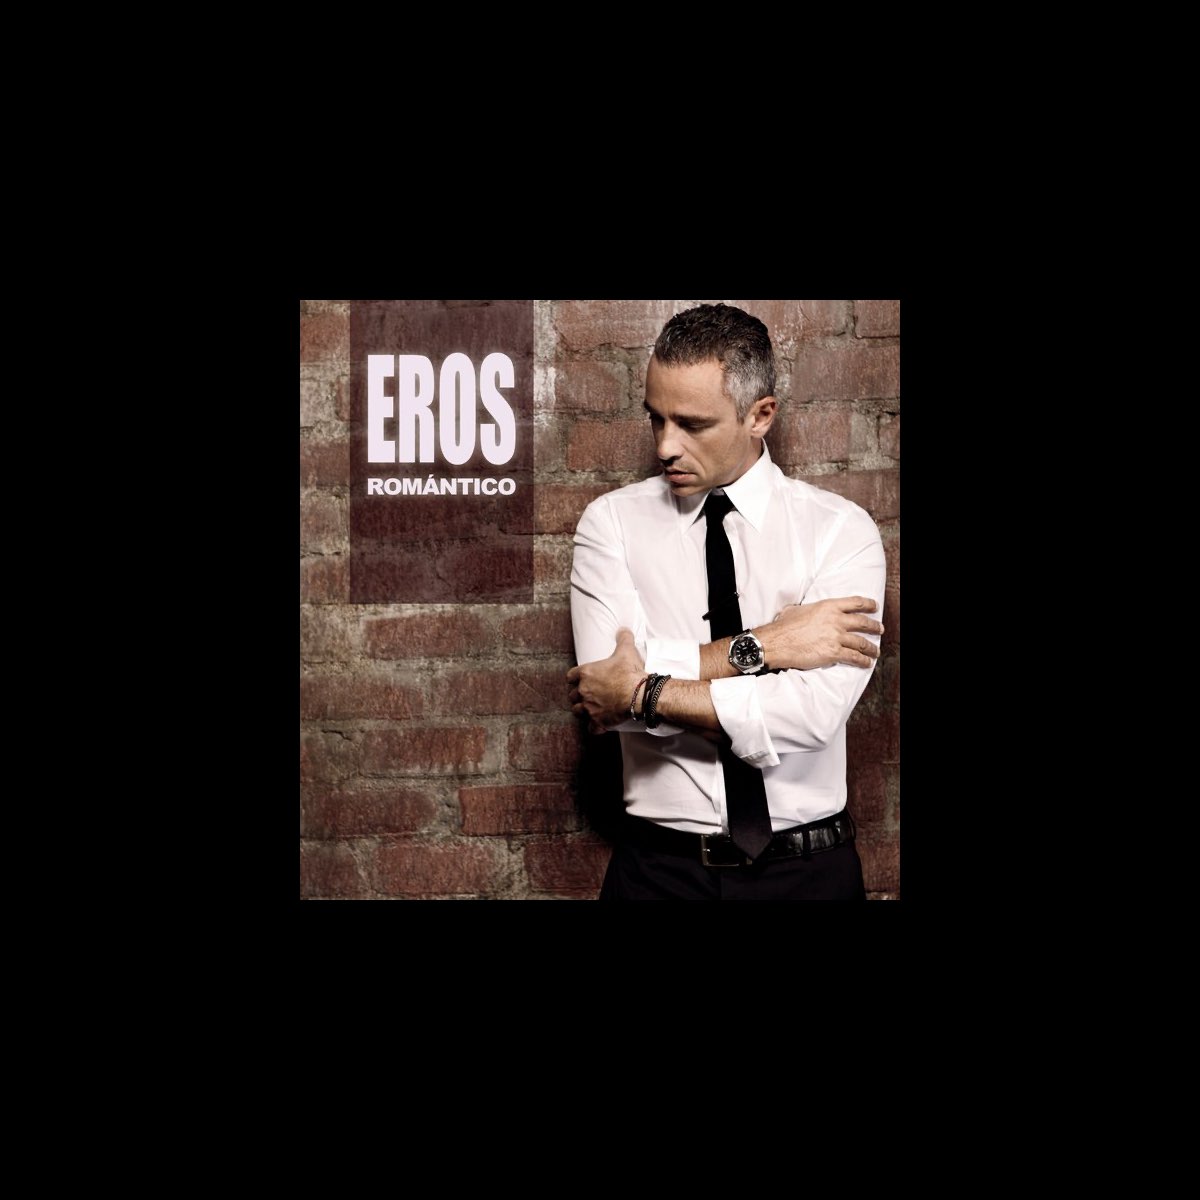 Eros Romántico by Eros Ramazzotti on Apple Music